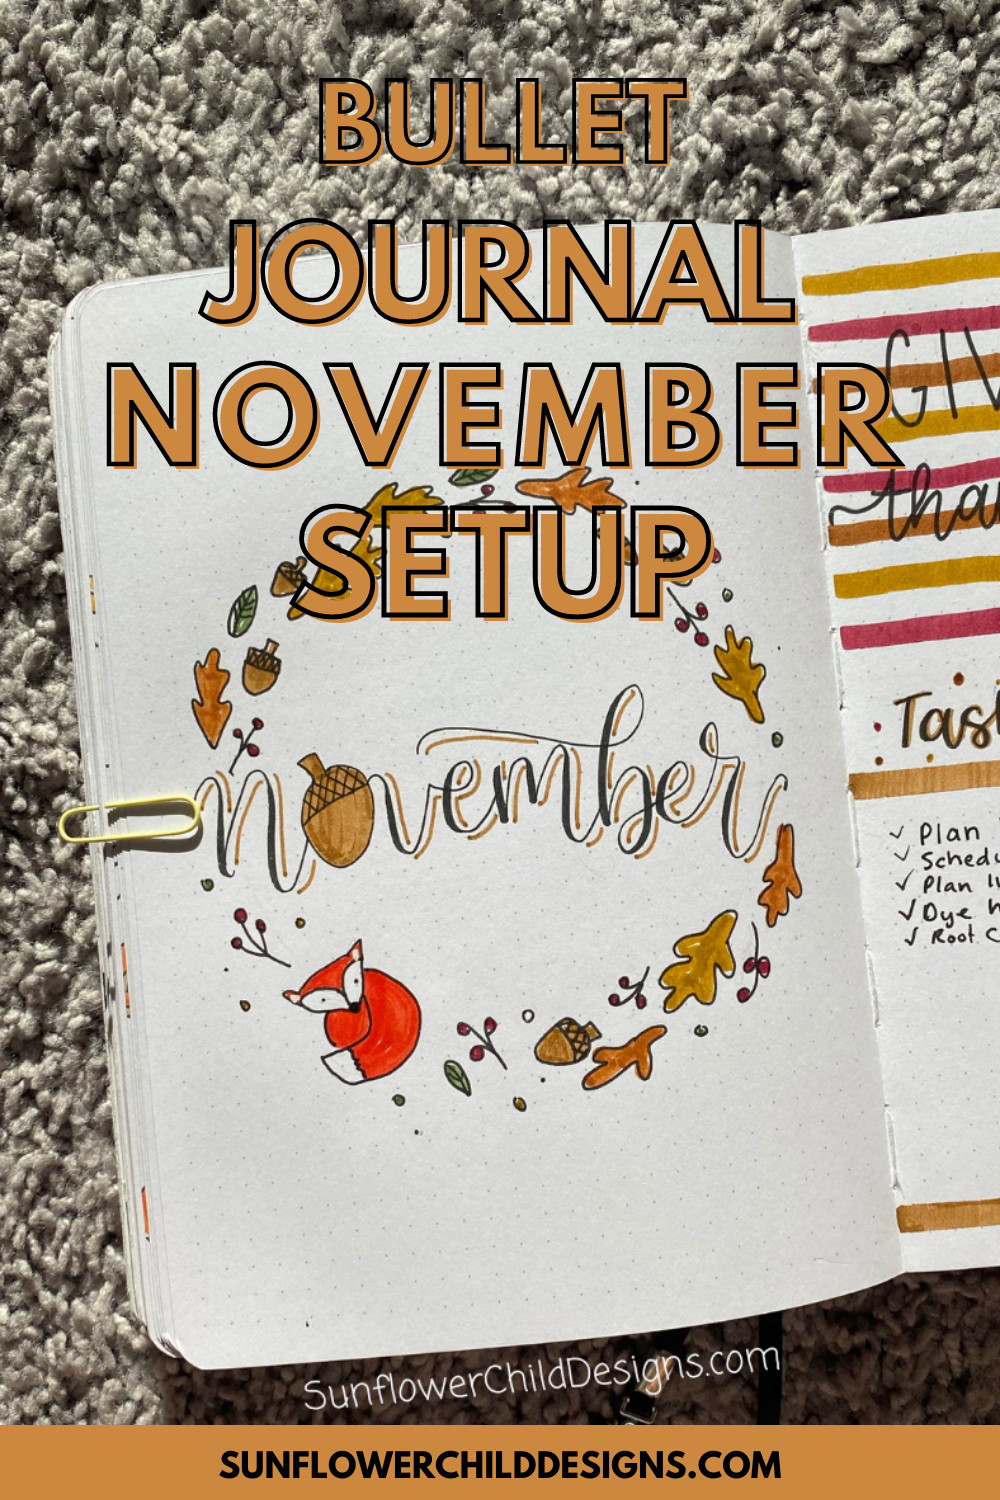 November-bullet-journal-ideas-14.png